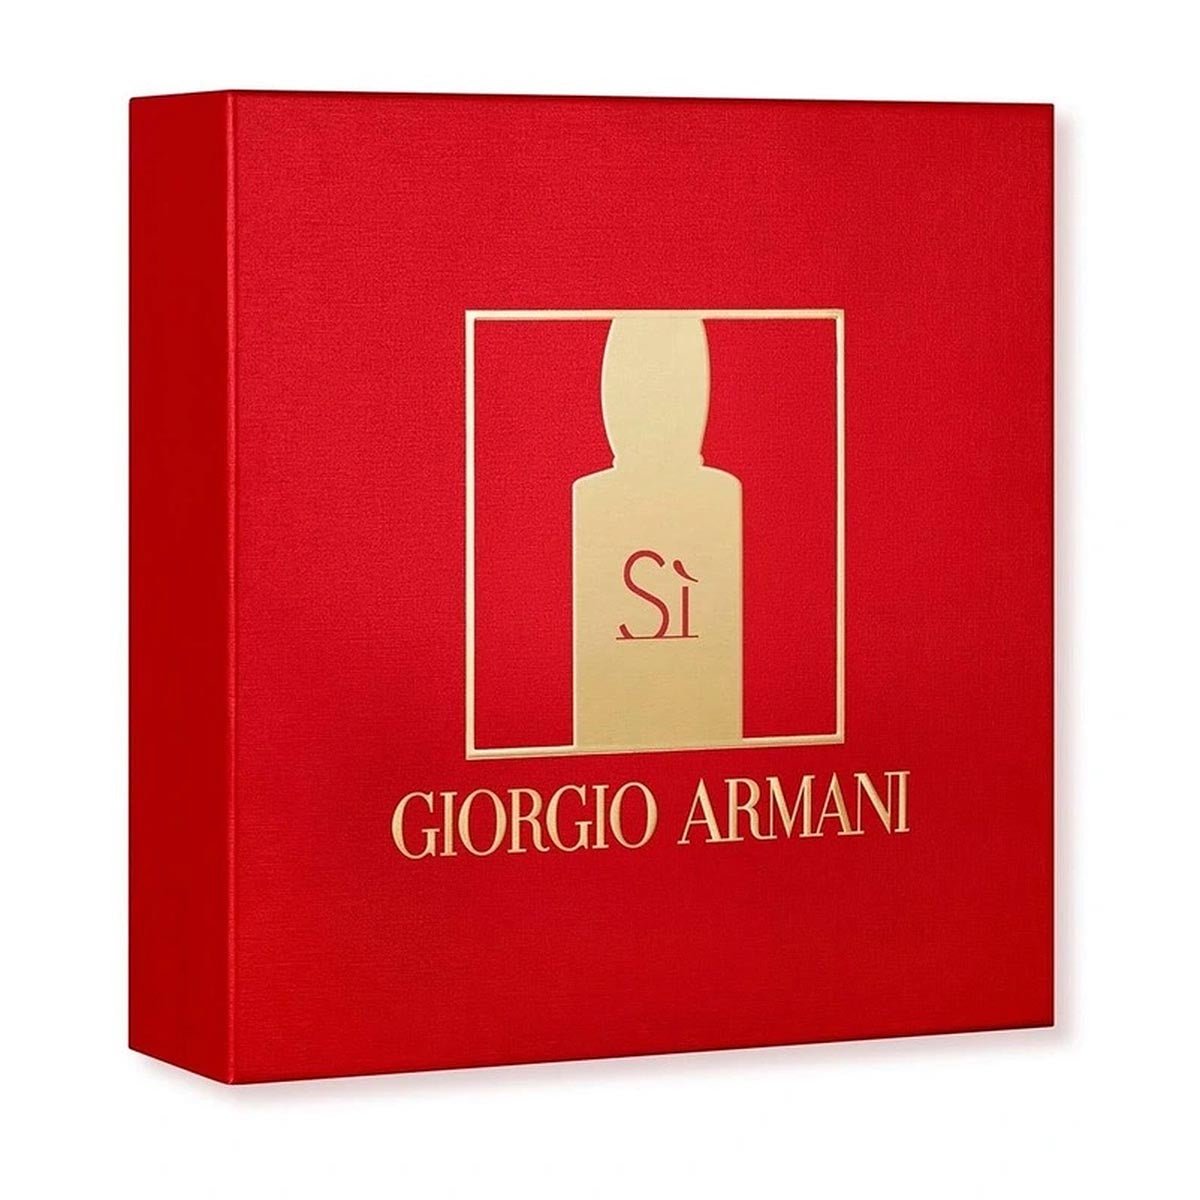 Giorgio Armani Si EDP Deluxe Gift Set | My Perfume Shop Australia